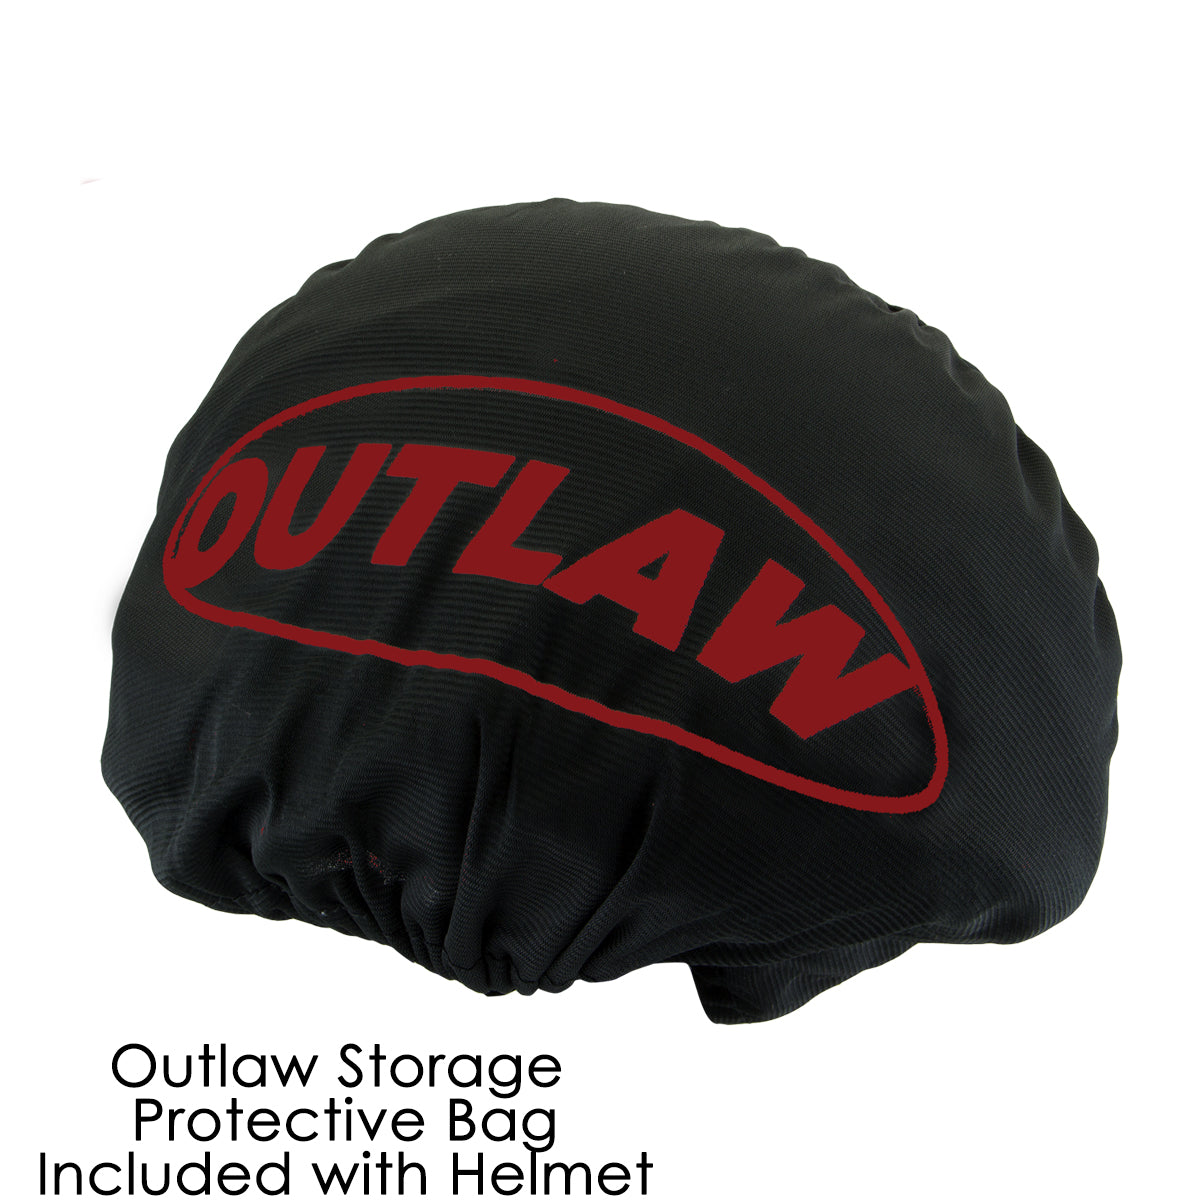 Outlaw T68 'The O.G.' Hi-Vis Yellow Advanced Motorcycle Skull Cap Half DOT Helmet